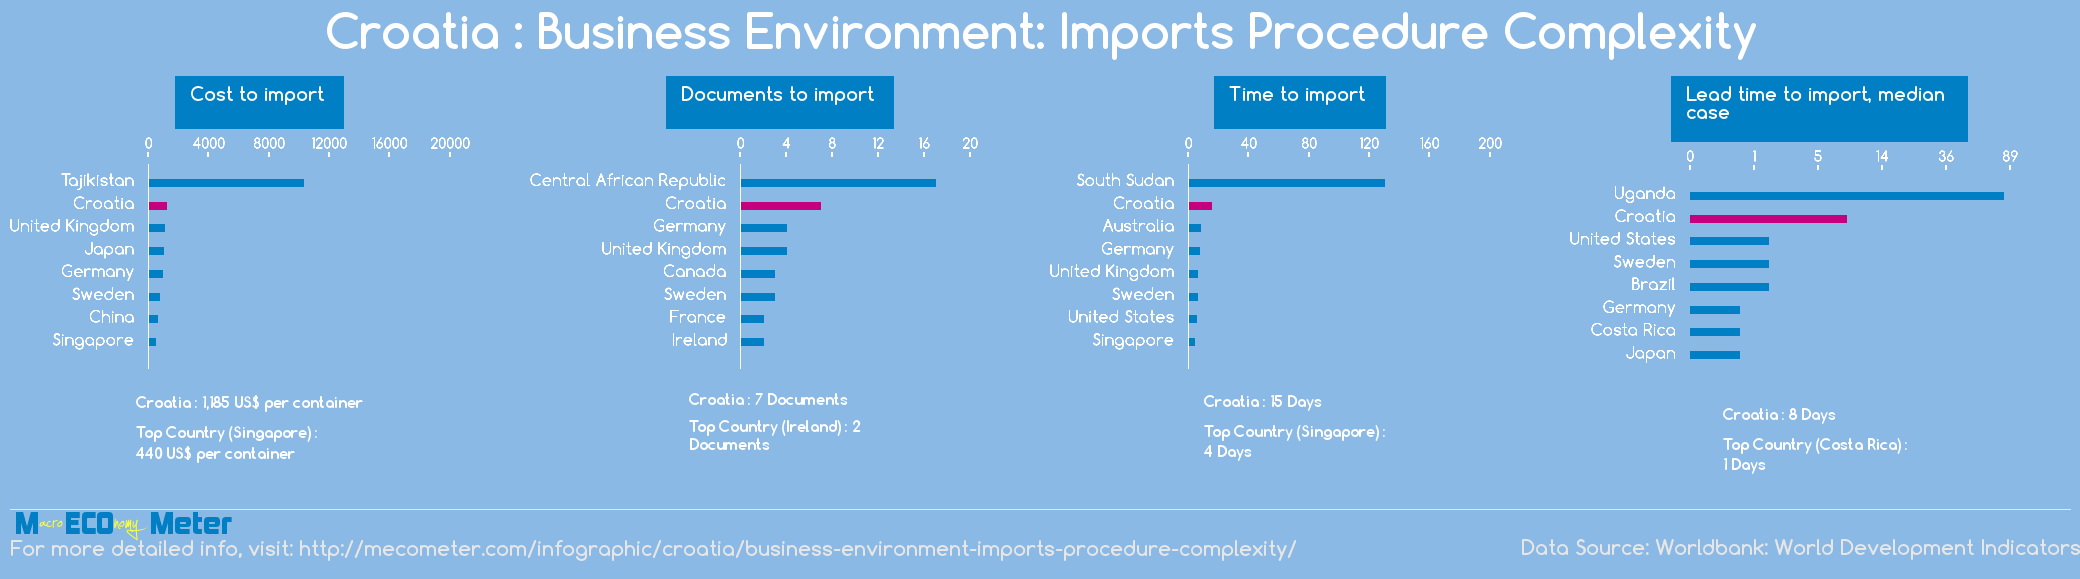 Croatia : Business Environment: Imports Procedure Complexity